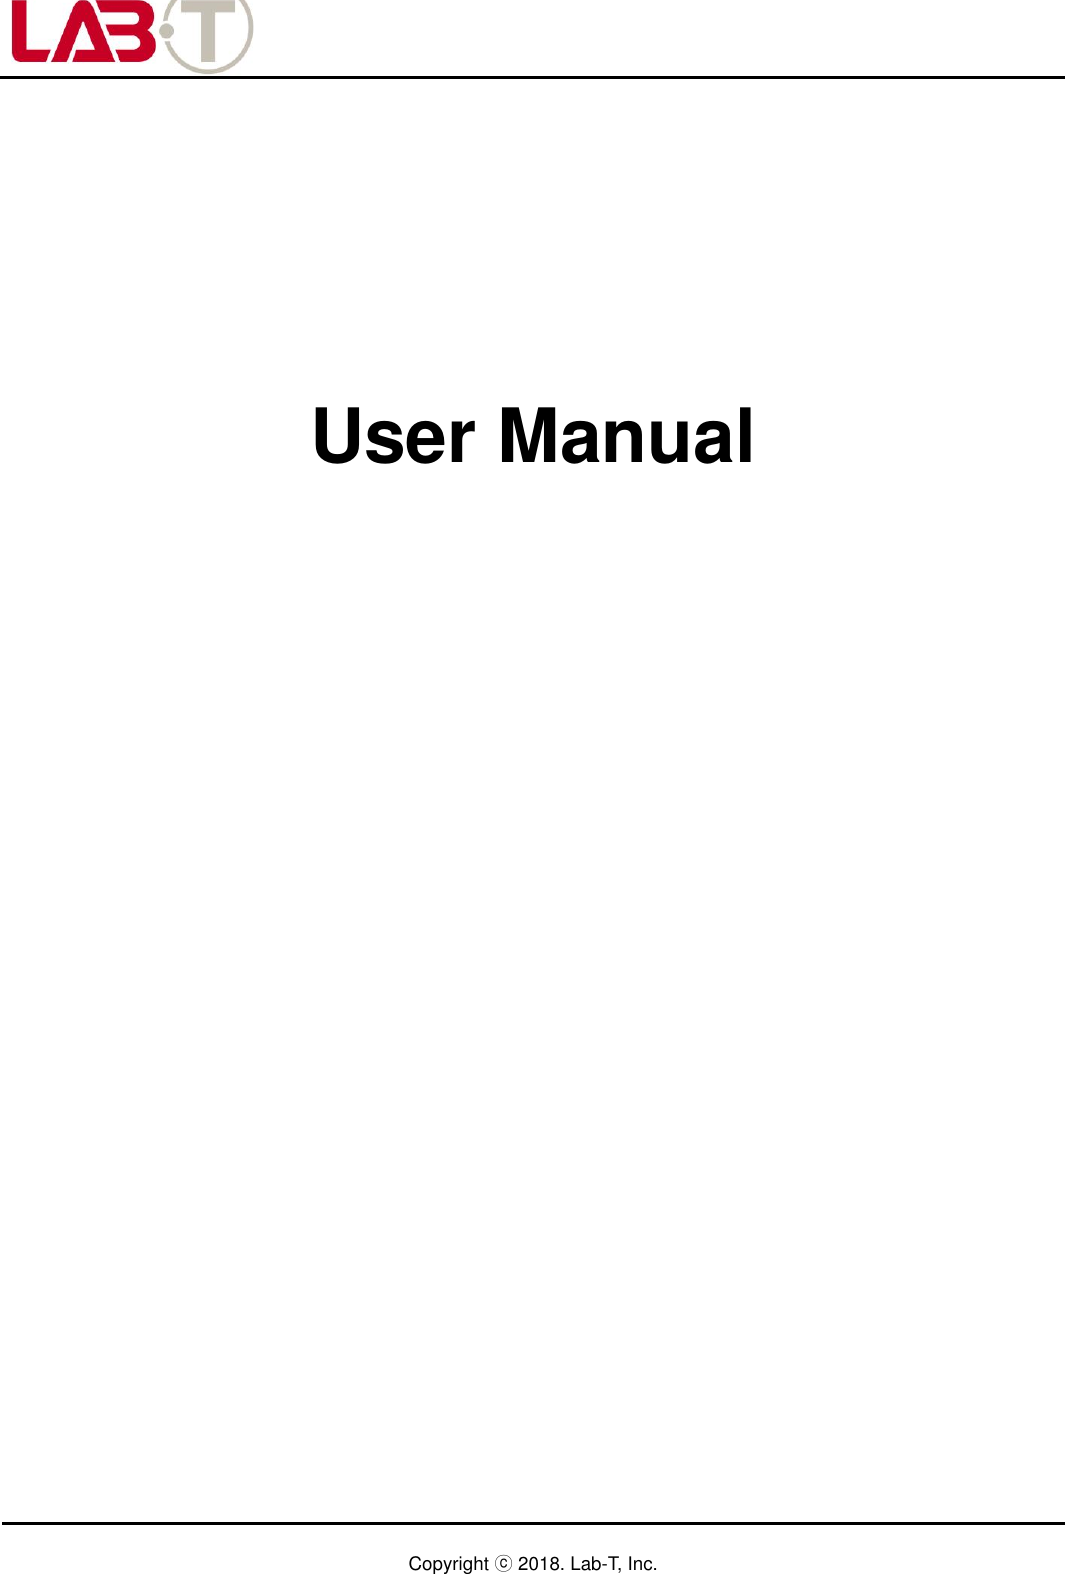            Copyright ⓒ 2018. Lab-T, Inc.     User Manual                                           